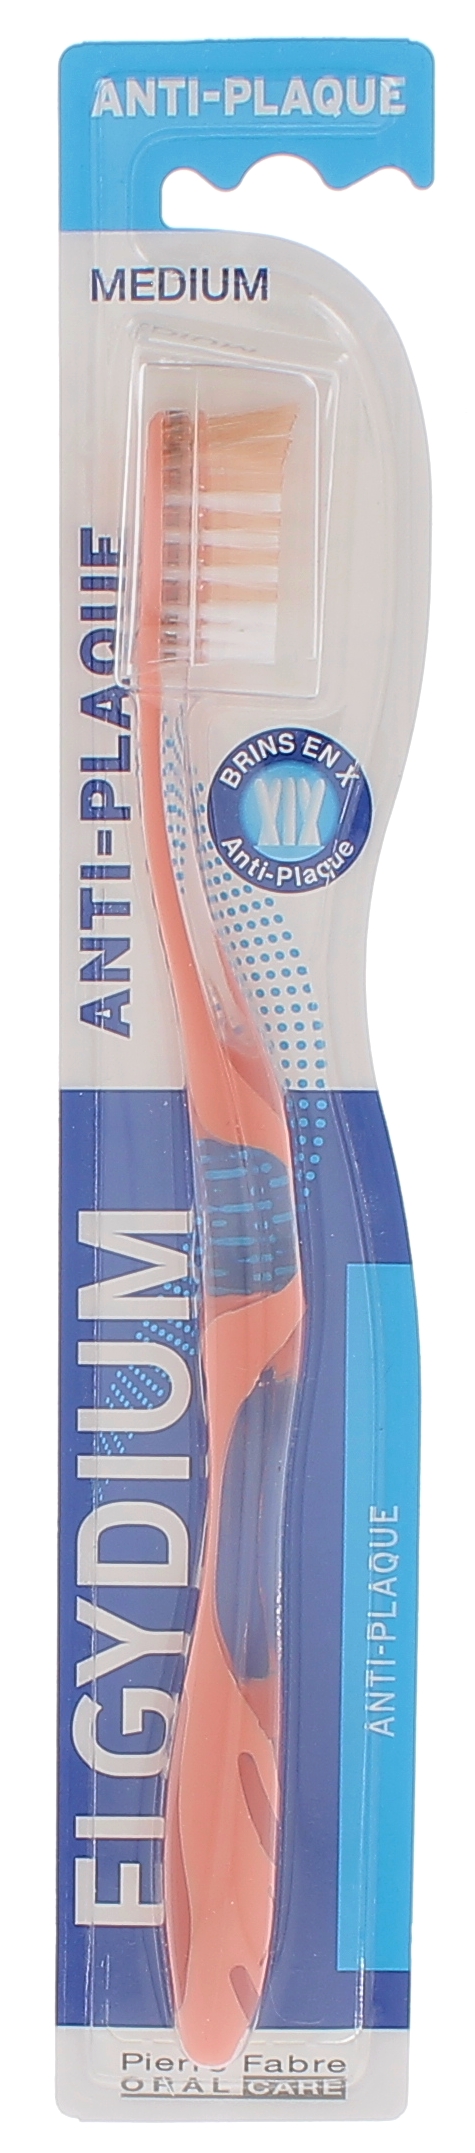 Brosse à dents medium anti-plaque Elgydium - une brosse à dents